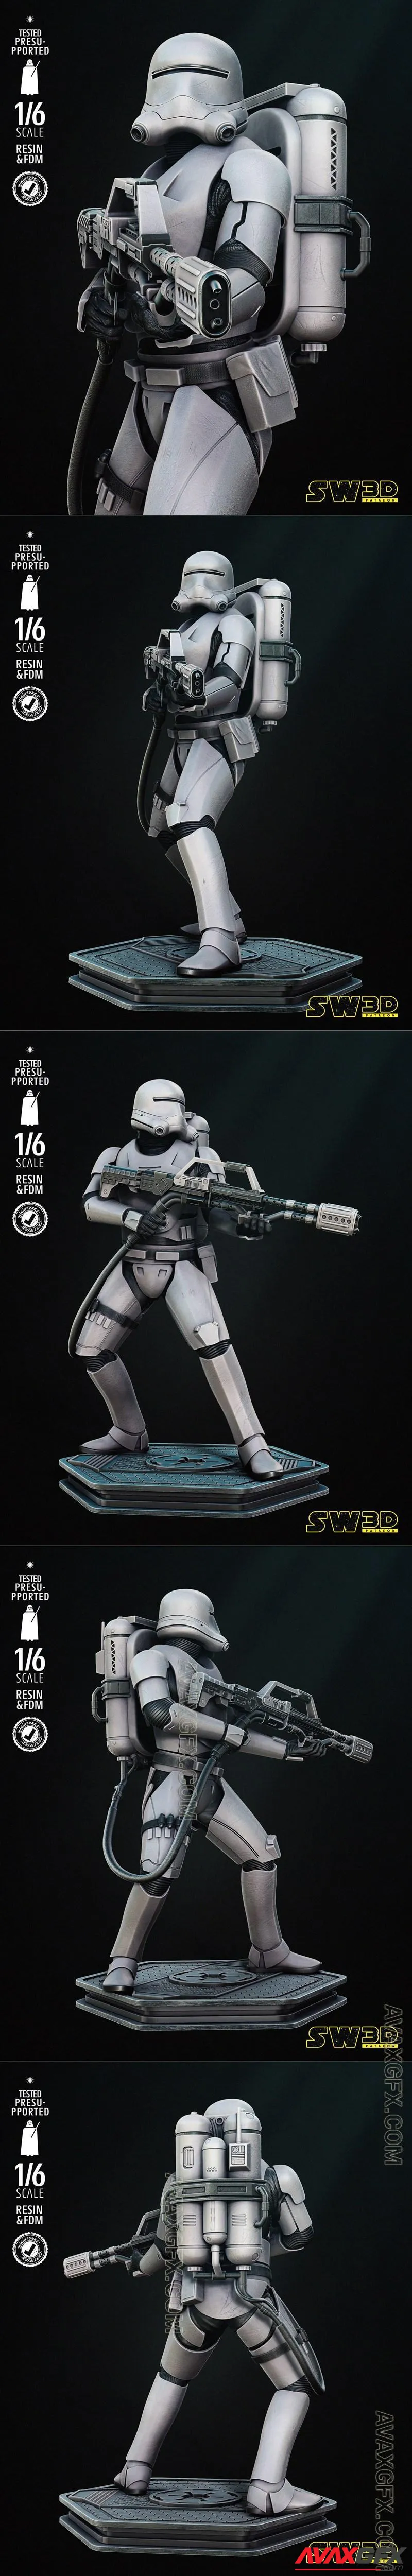 Star Wars - Flame Trooper Sculpture - STL 3D Model